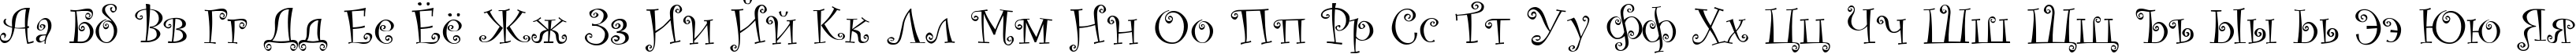 Пример написания русского алфавита шрифтом Old Comedy